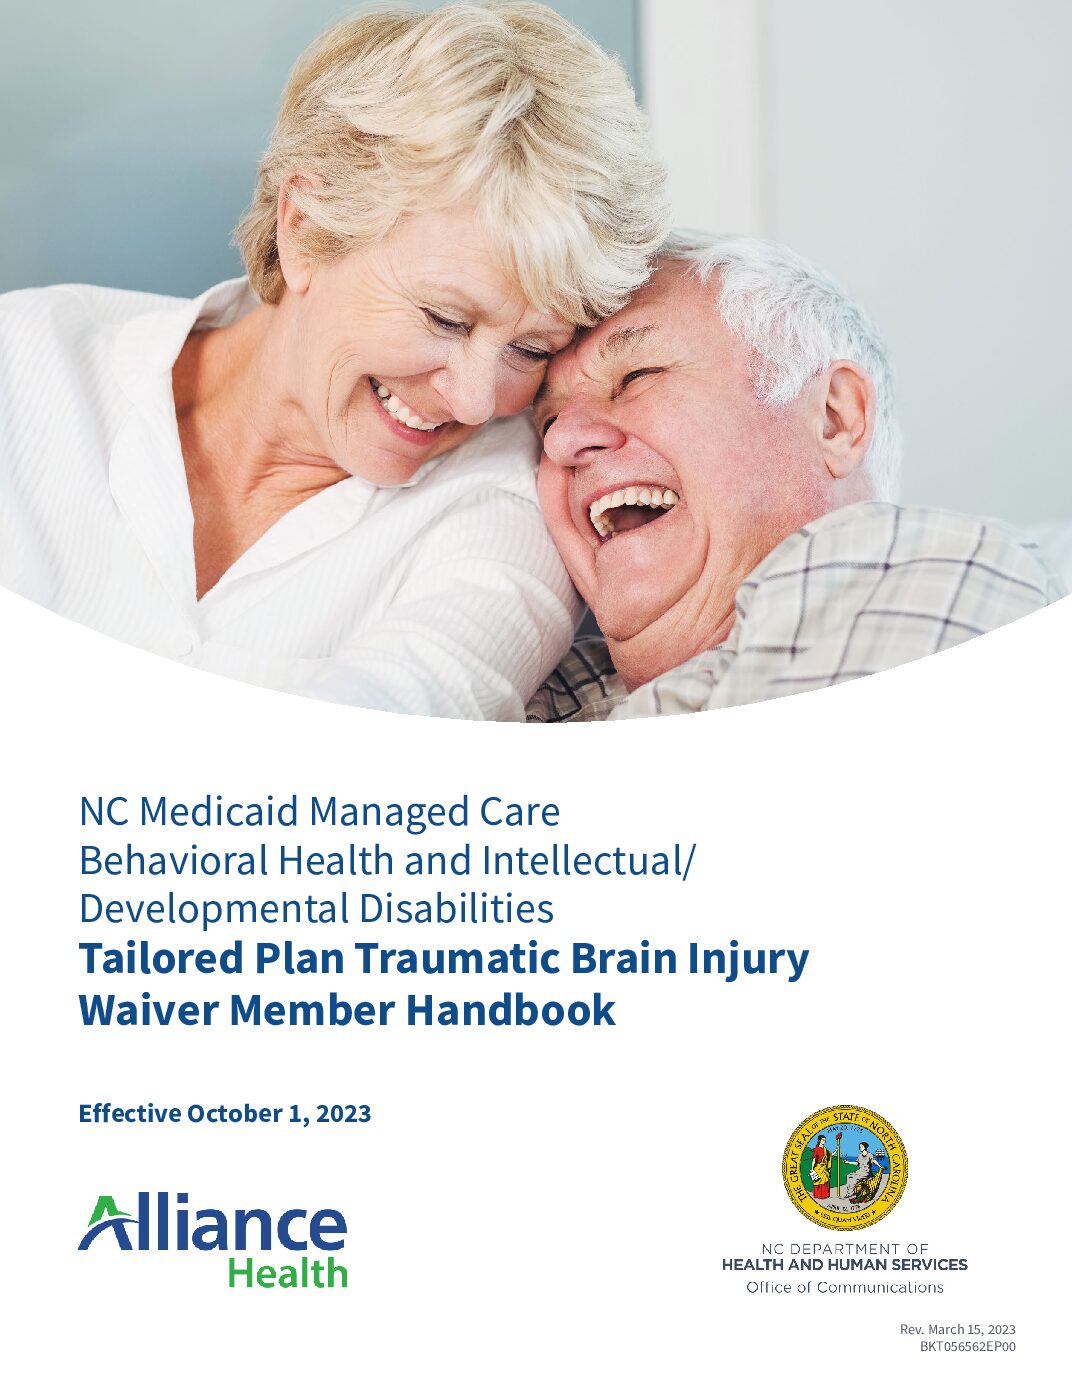 Tailored Plan Traumatic Brain Injury Waiver Member Handbook